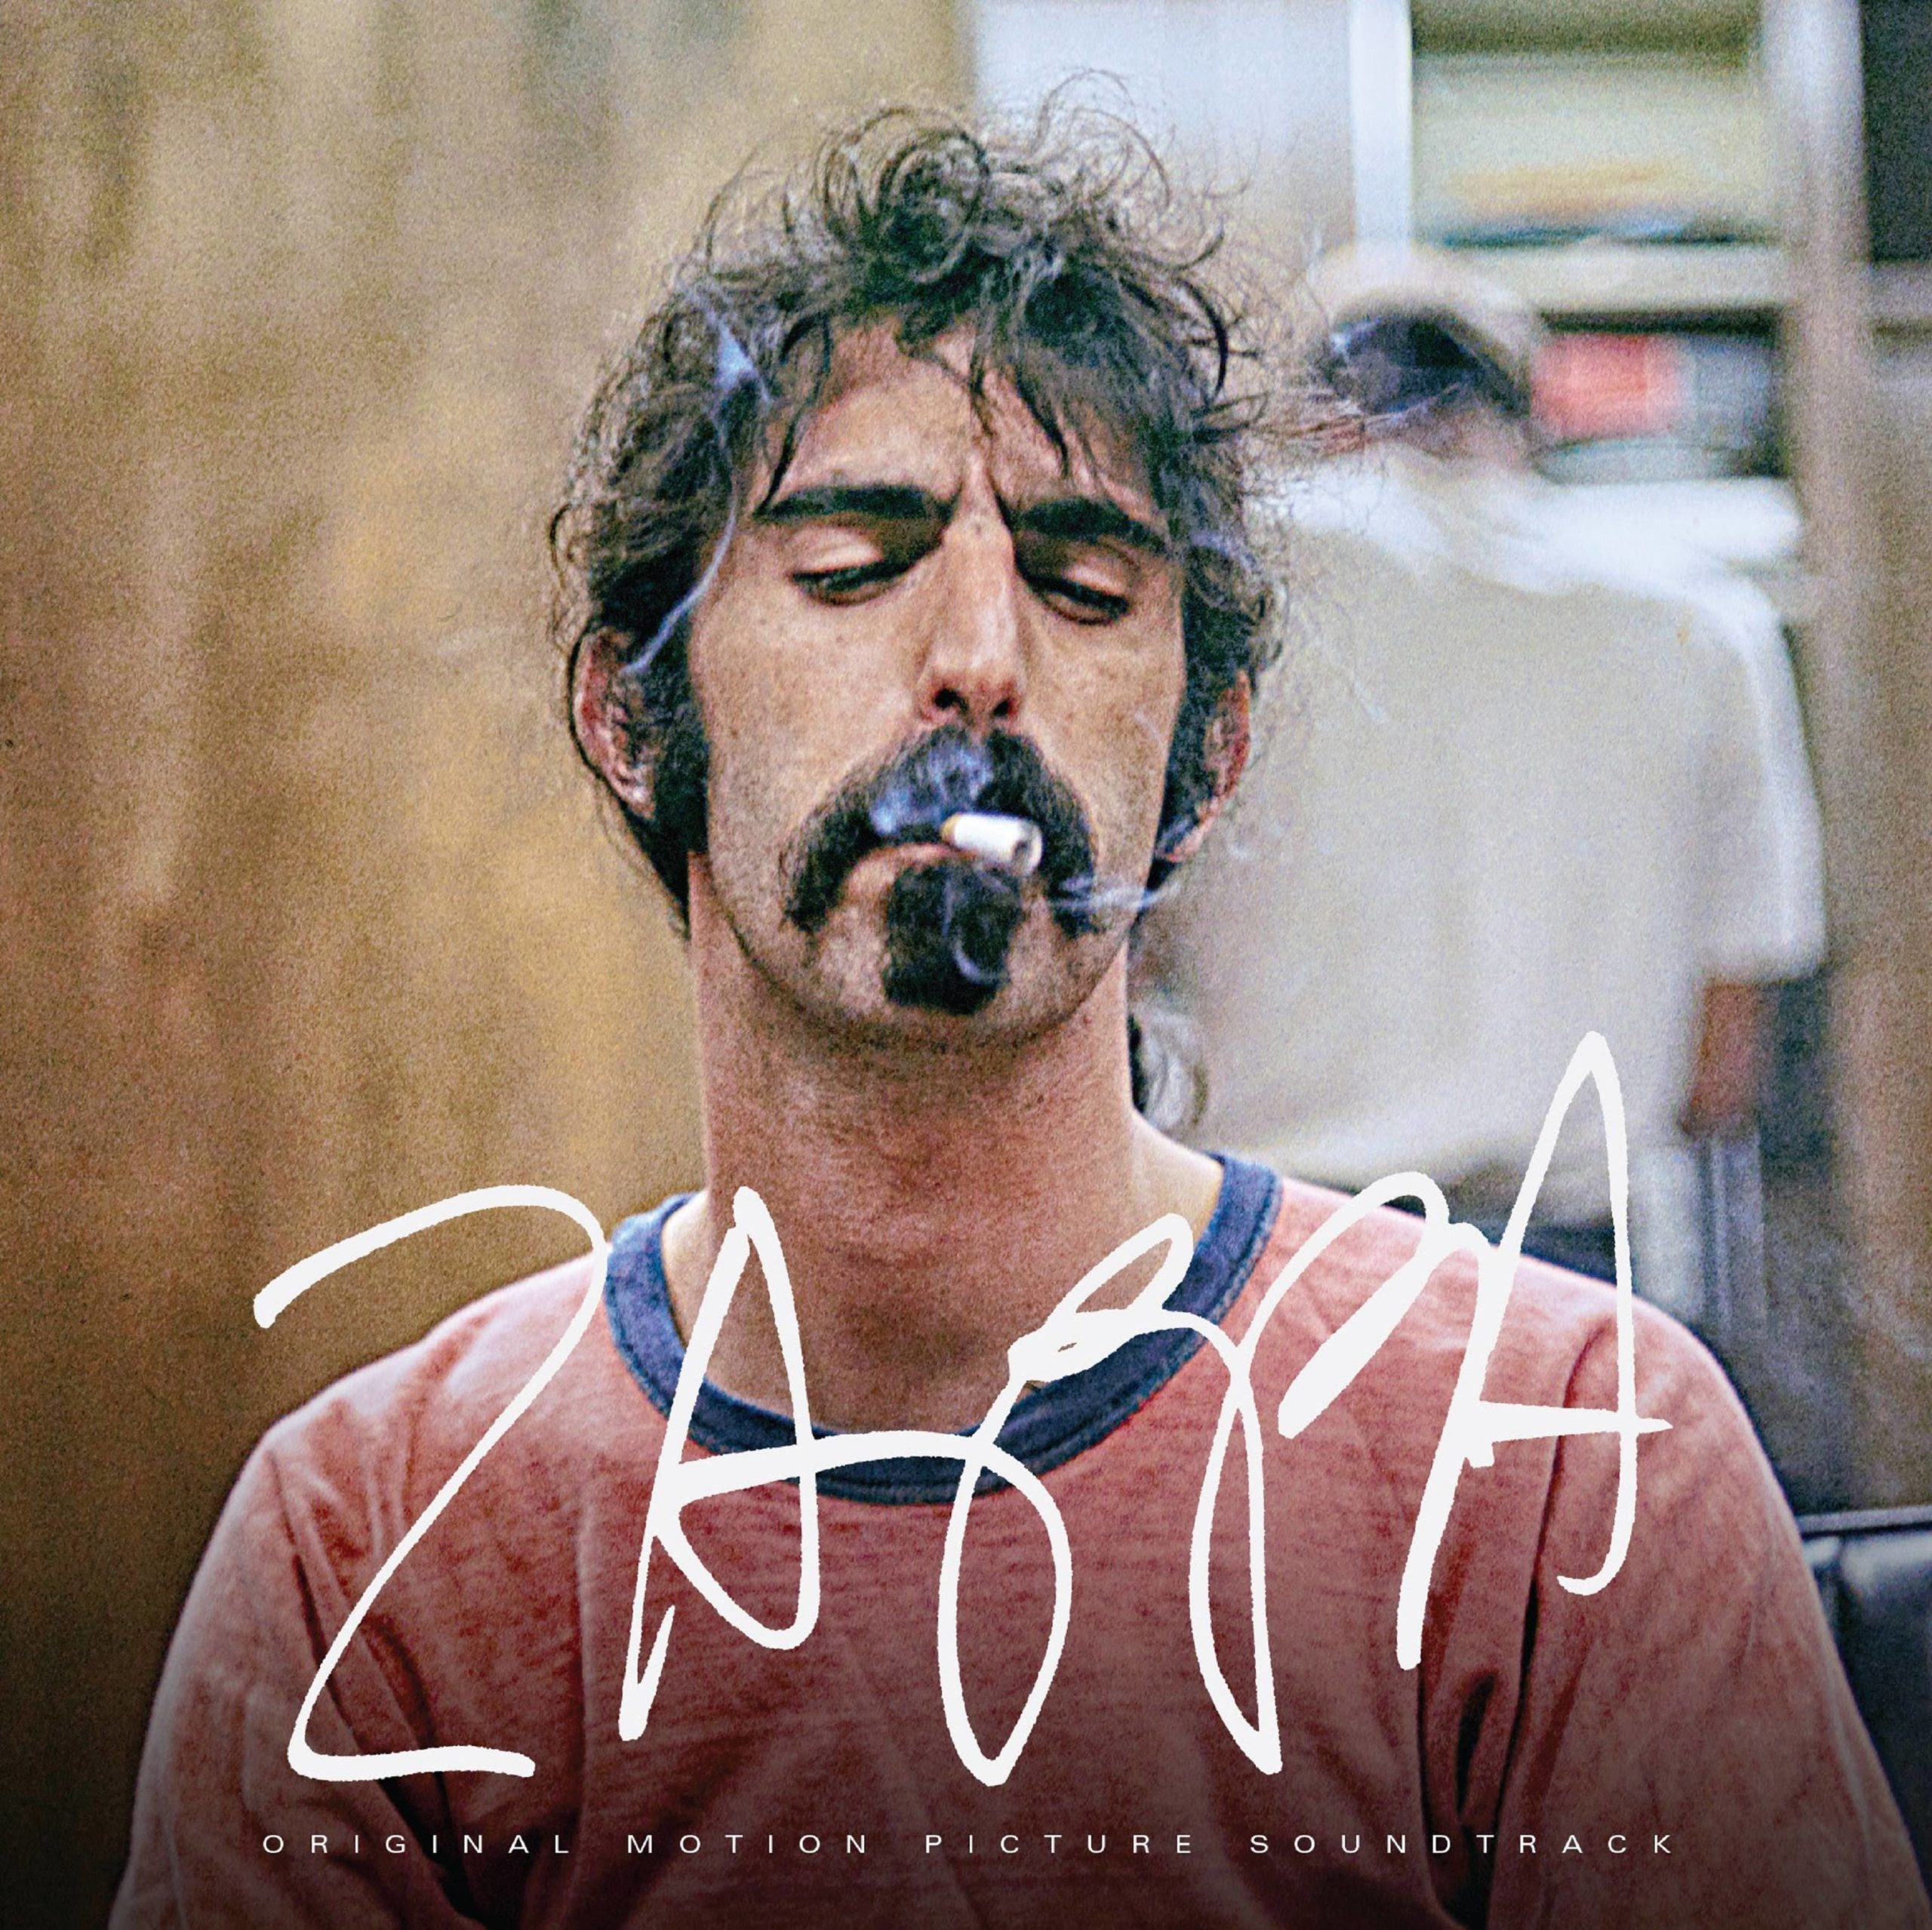 FLOOD - Frank Zappa, “Zappa Original Motion Picture Soundtrack”